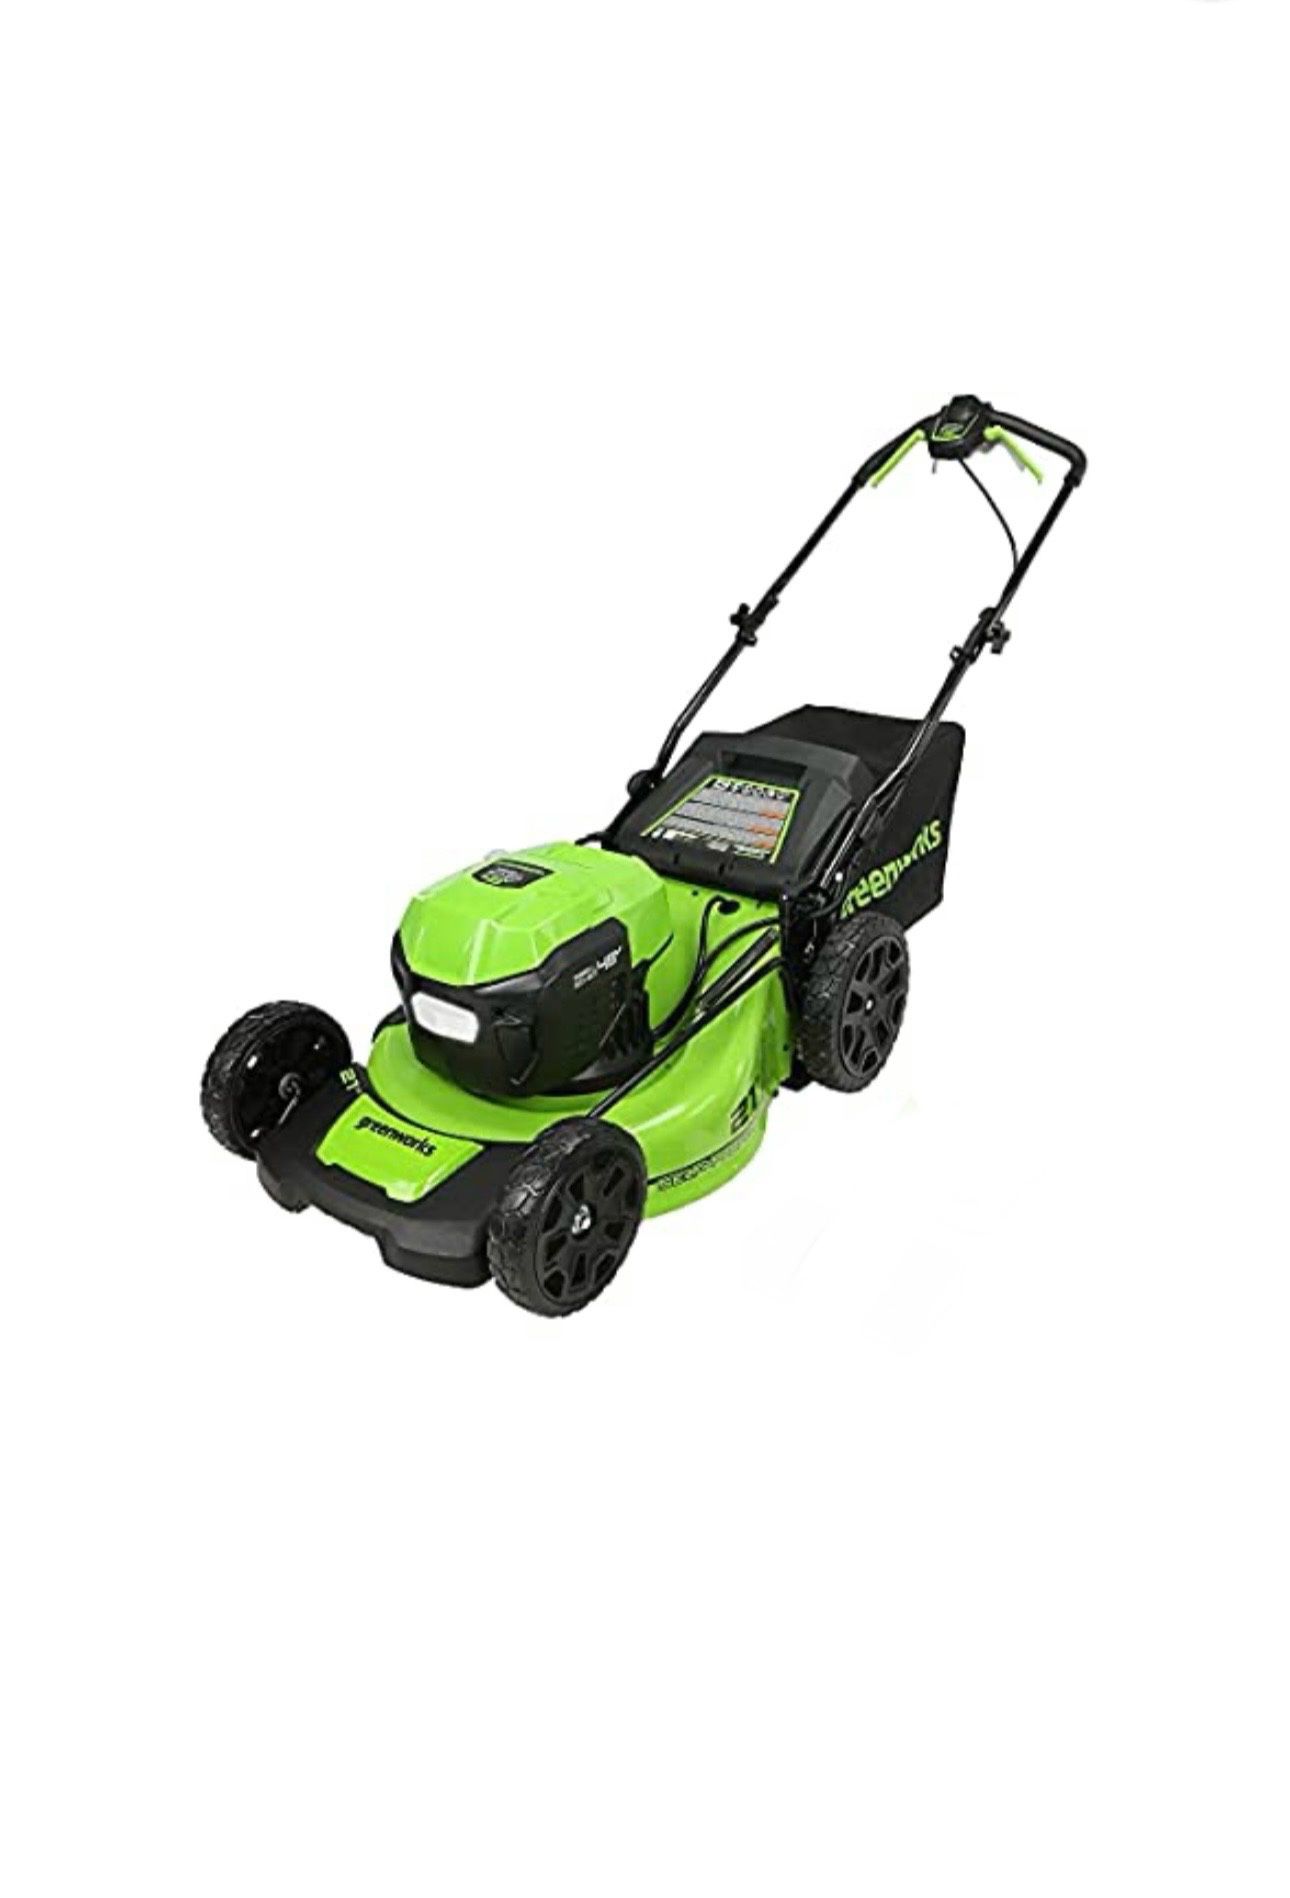 Greenworks 48V 21-Inch Brushless Self-Propelled Lawn Mower